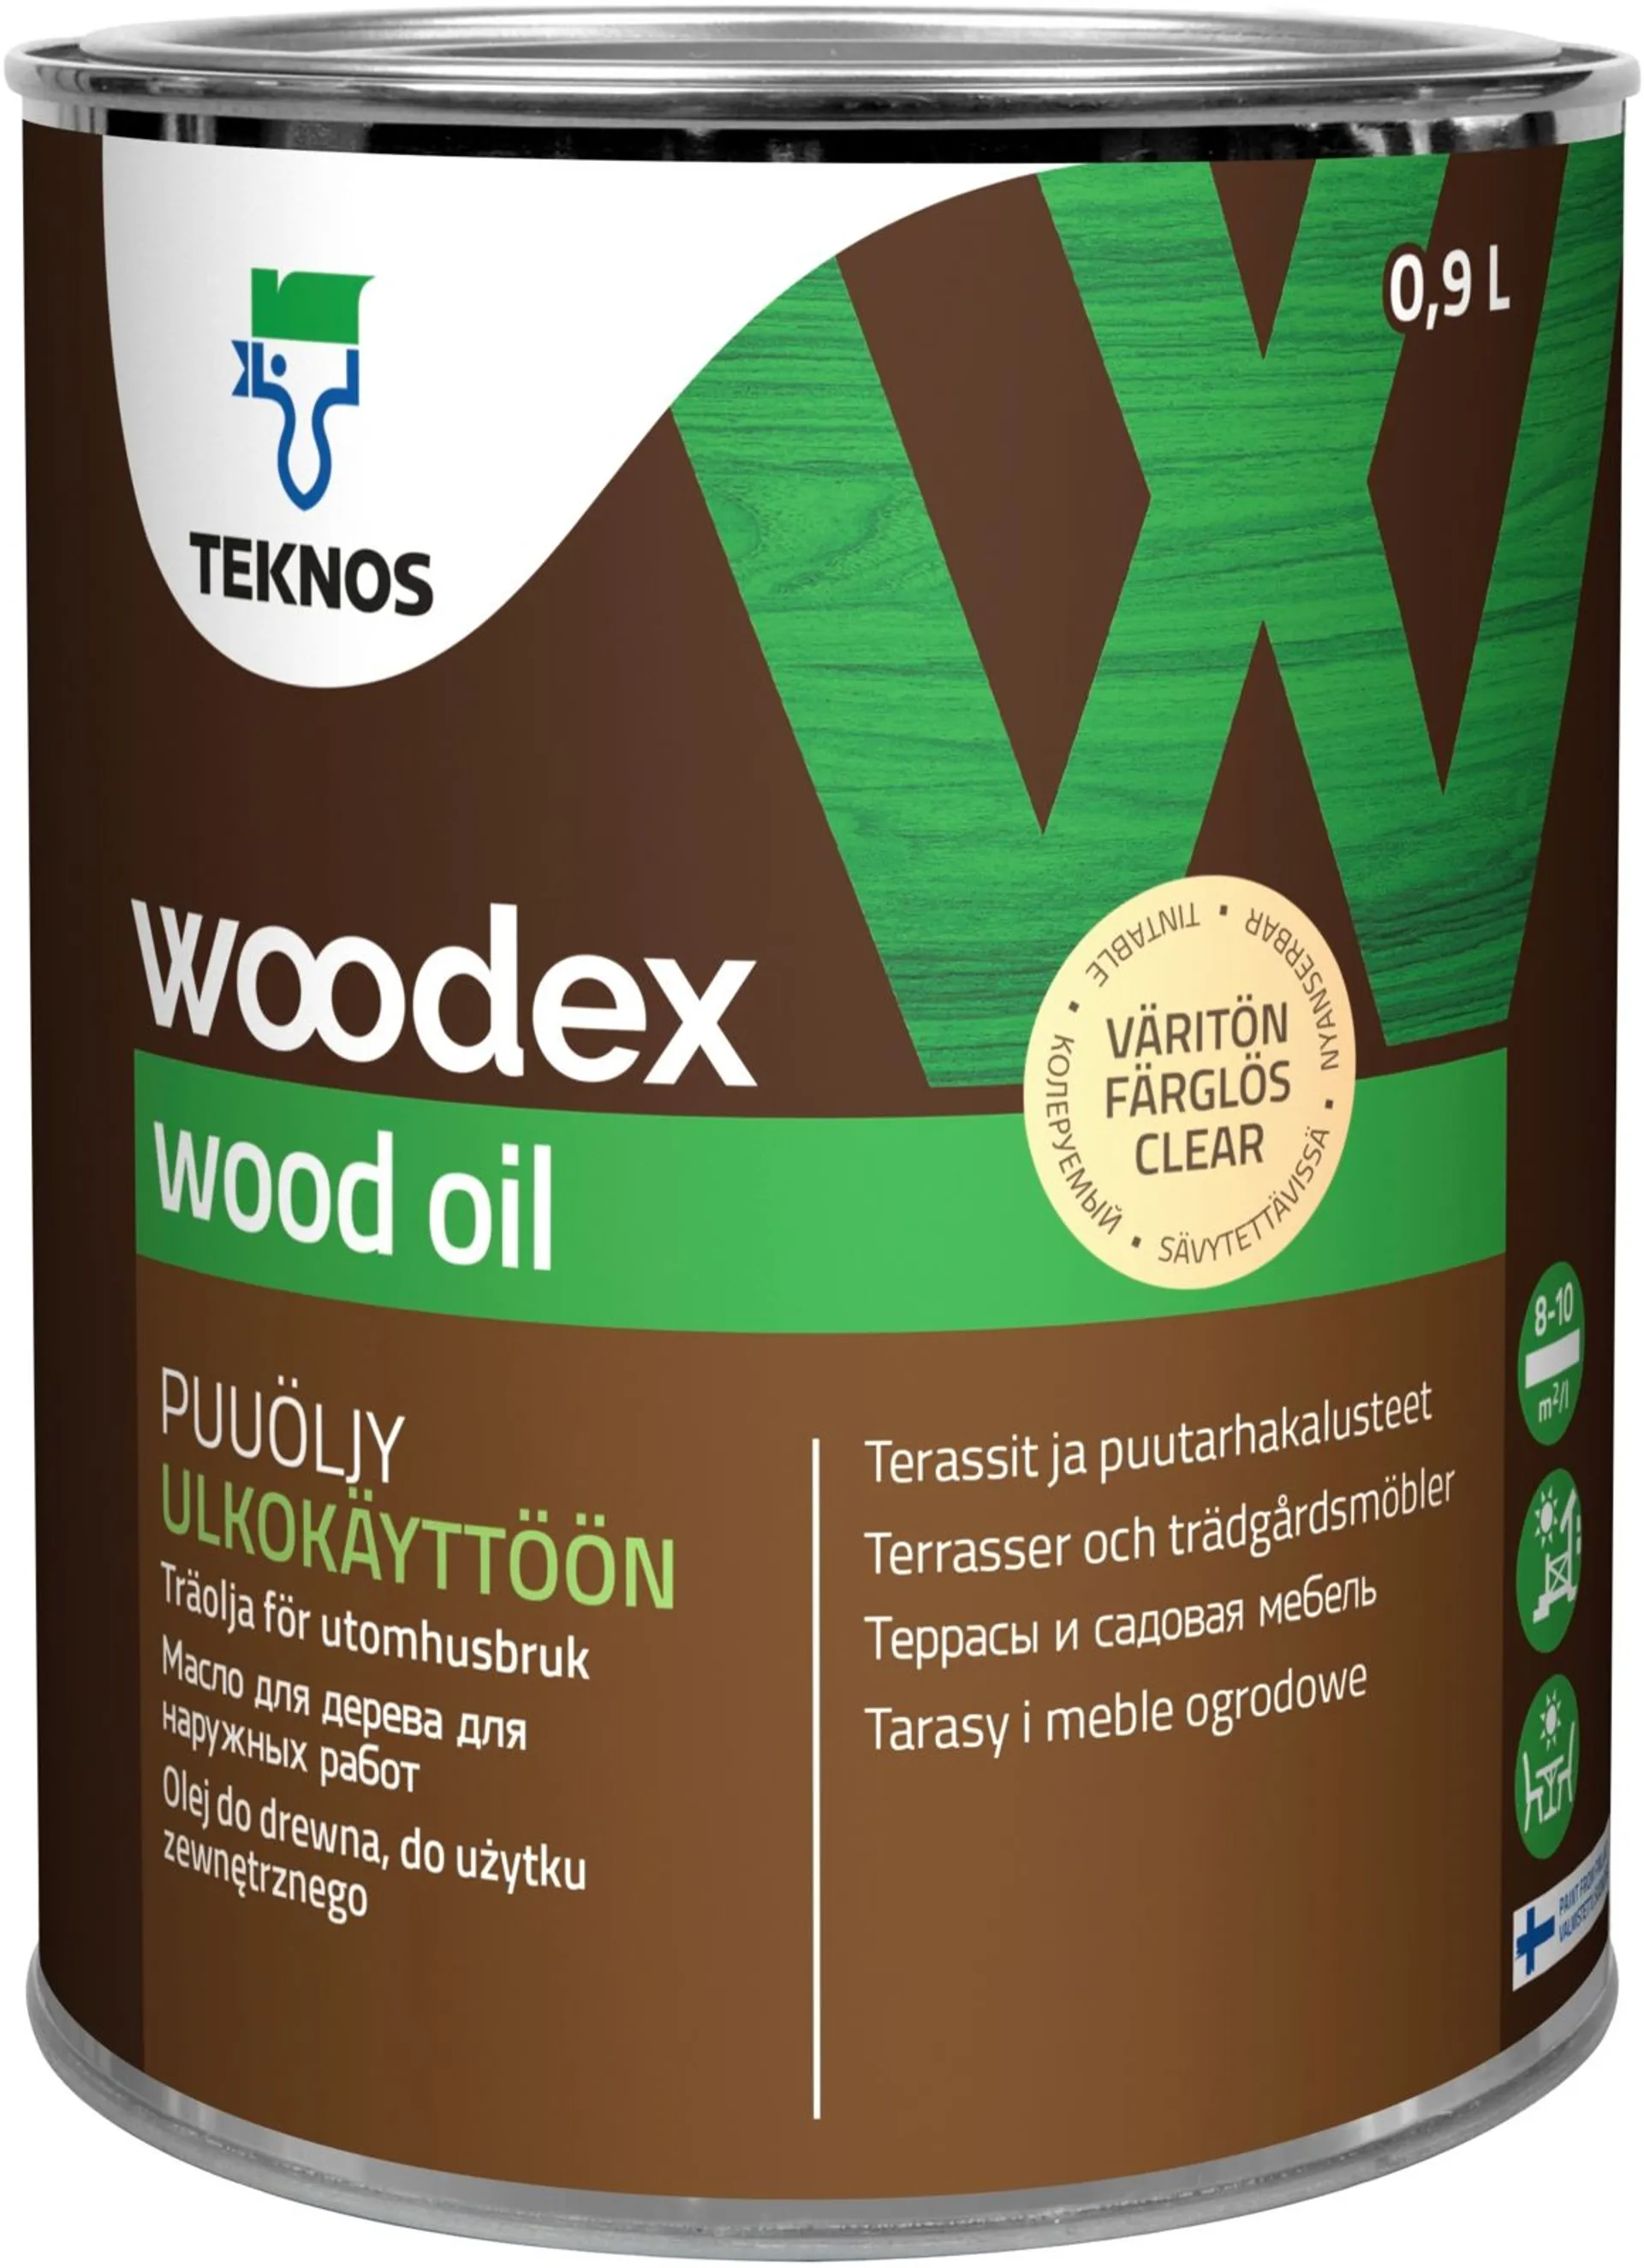 Teknos puuöljy Woodex Wood Oil  0,9 l väritön